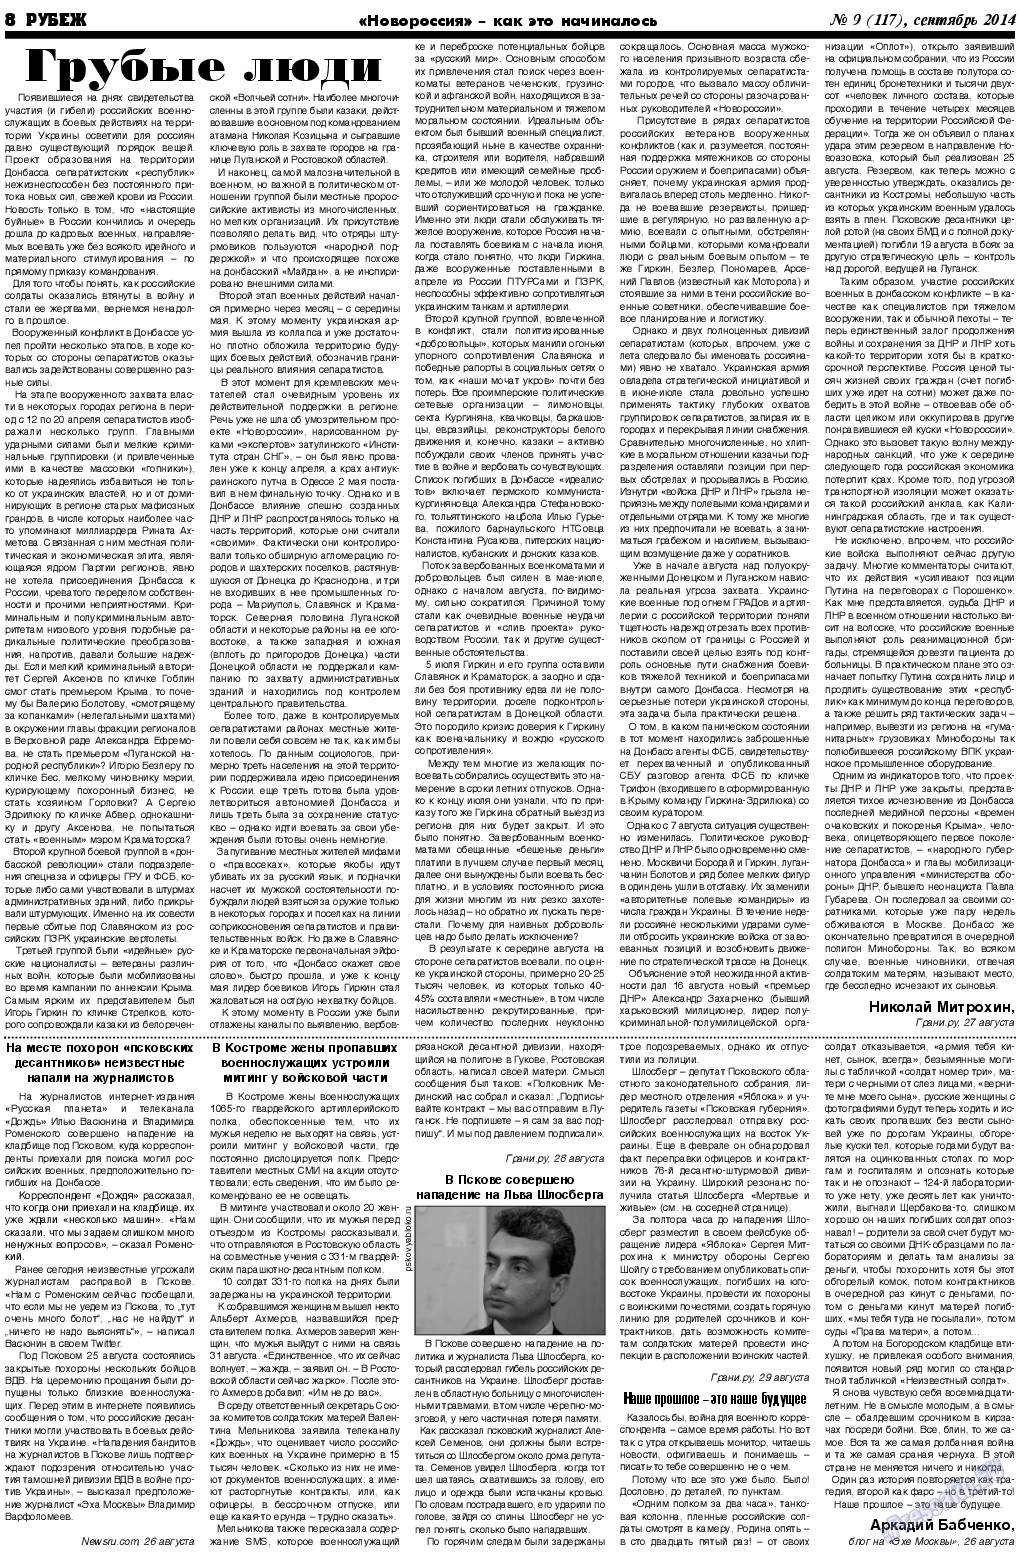 Рубеж, газета. 2014 №9 стр.8